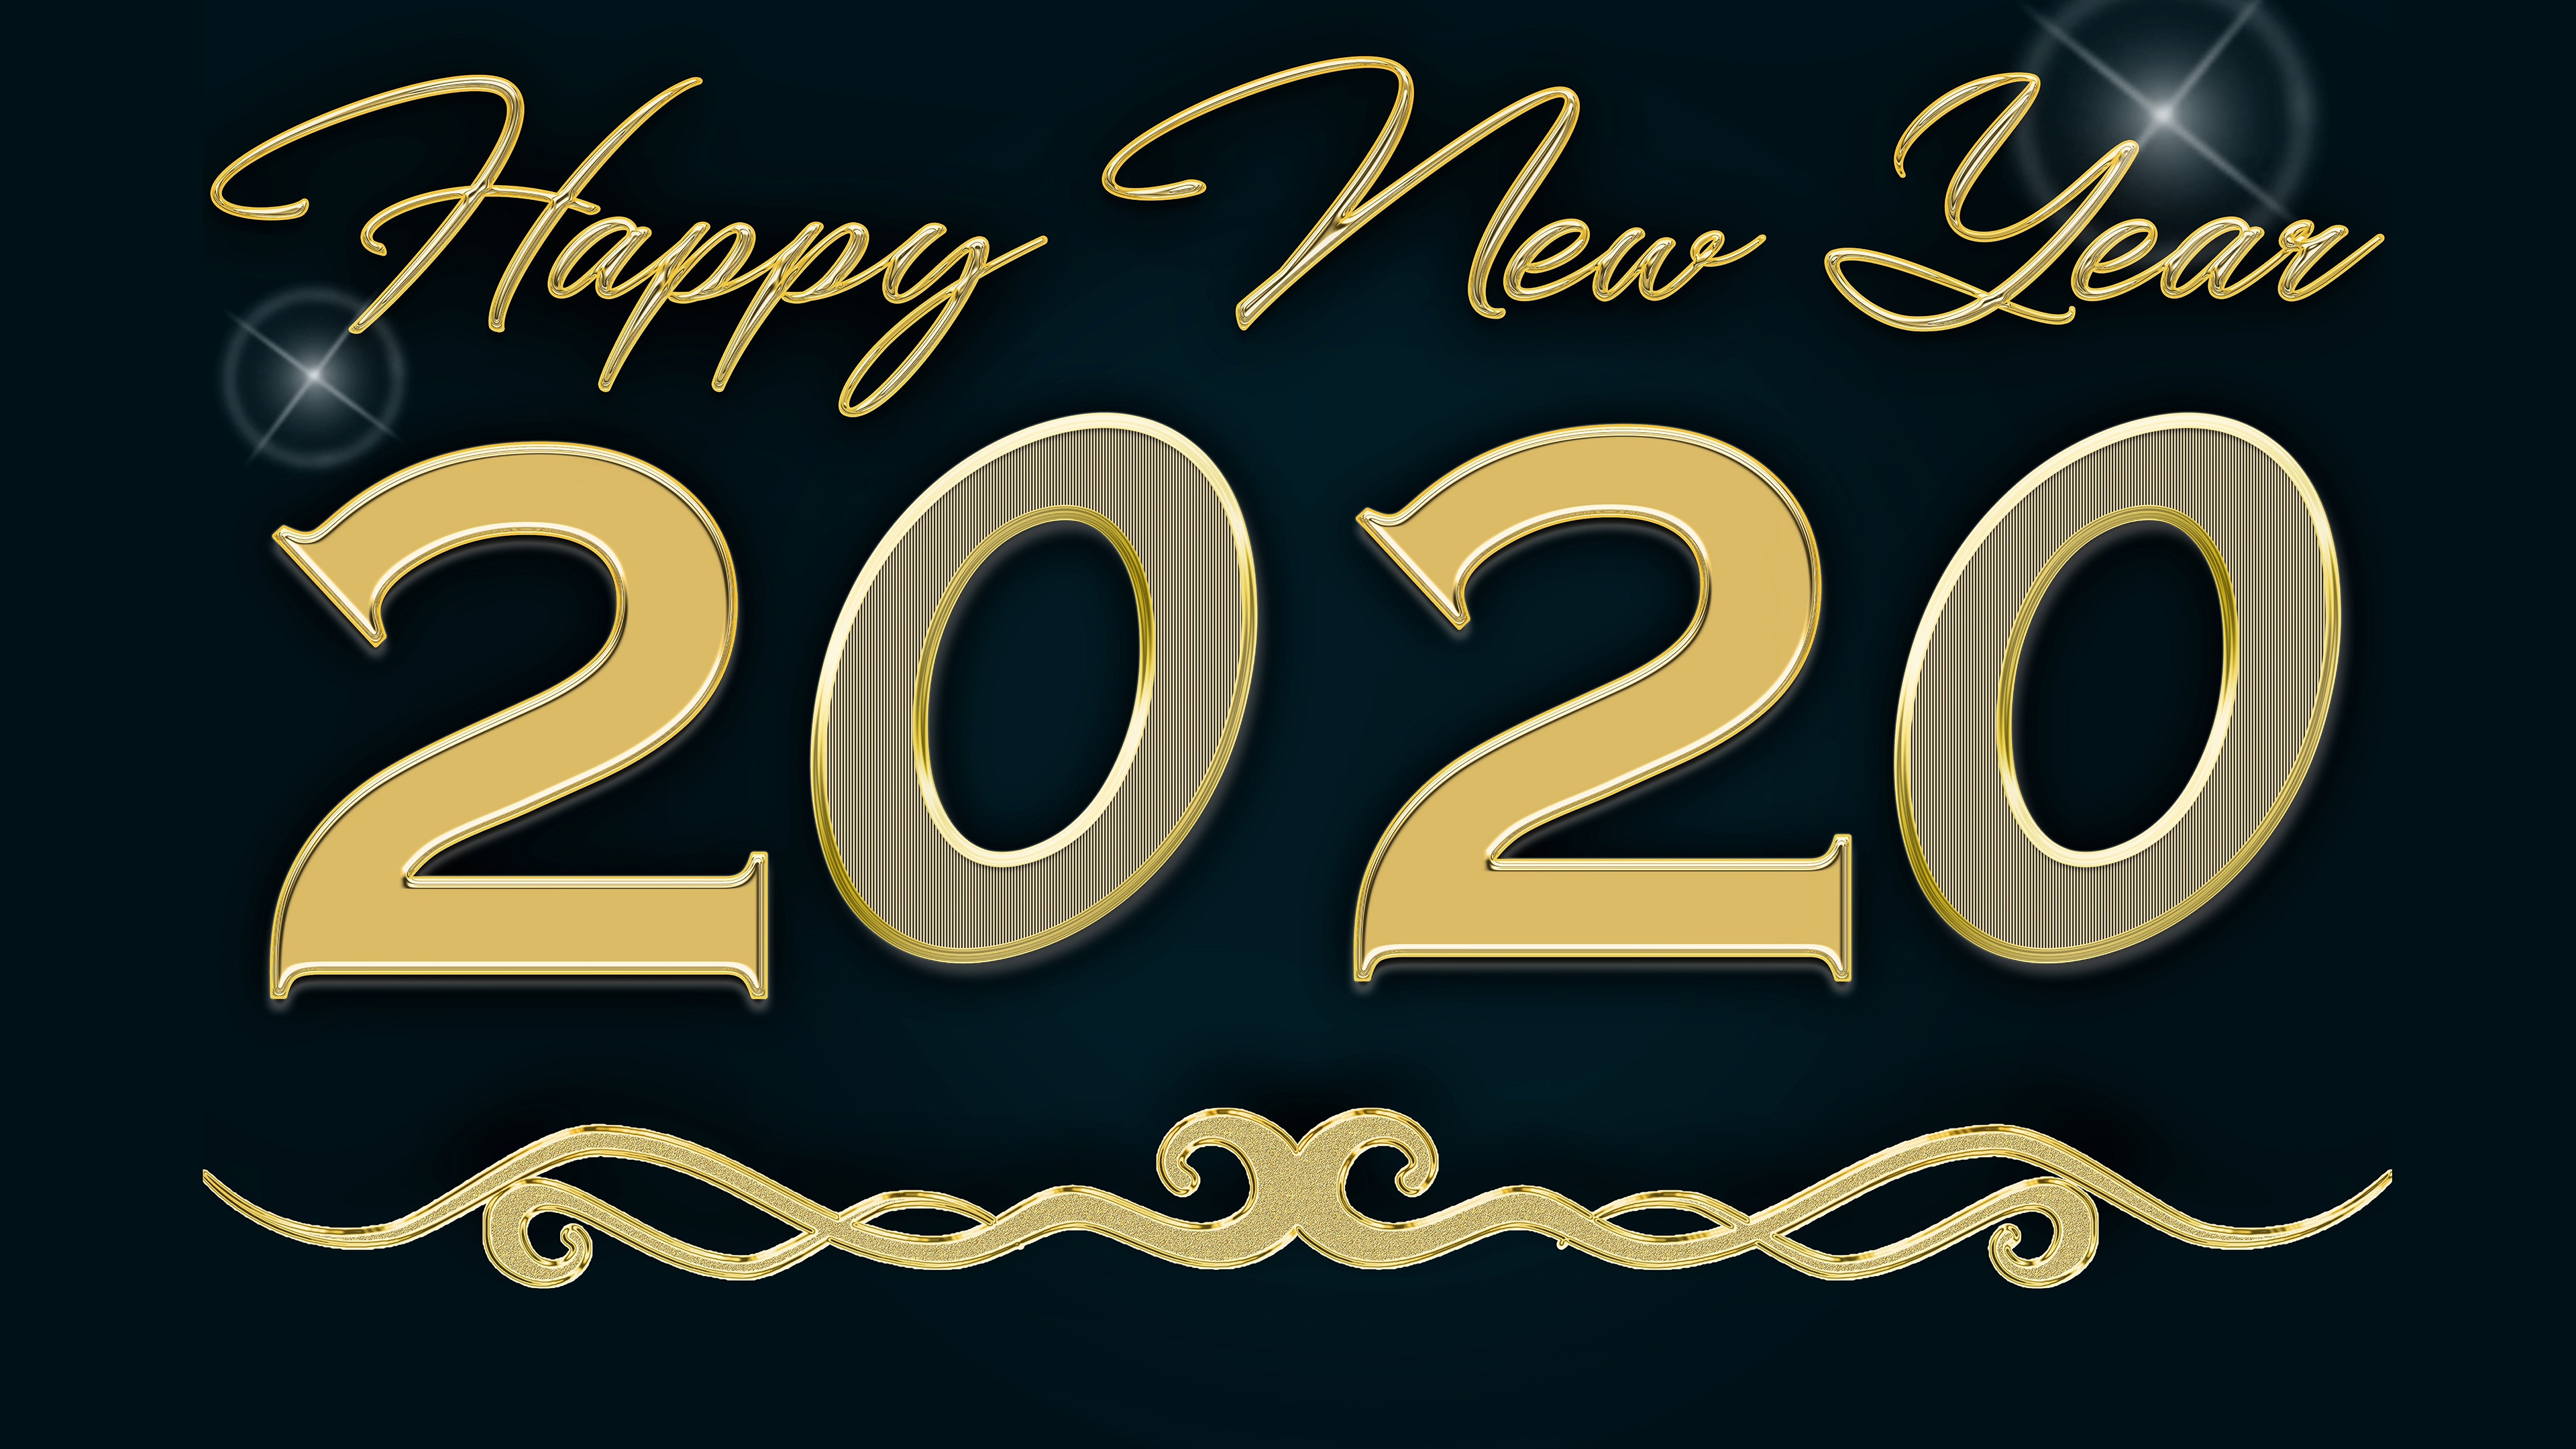 New Year 2020 4k Ultra Hd Wallpaper Background Image 4782x3188 Riset 1076